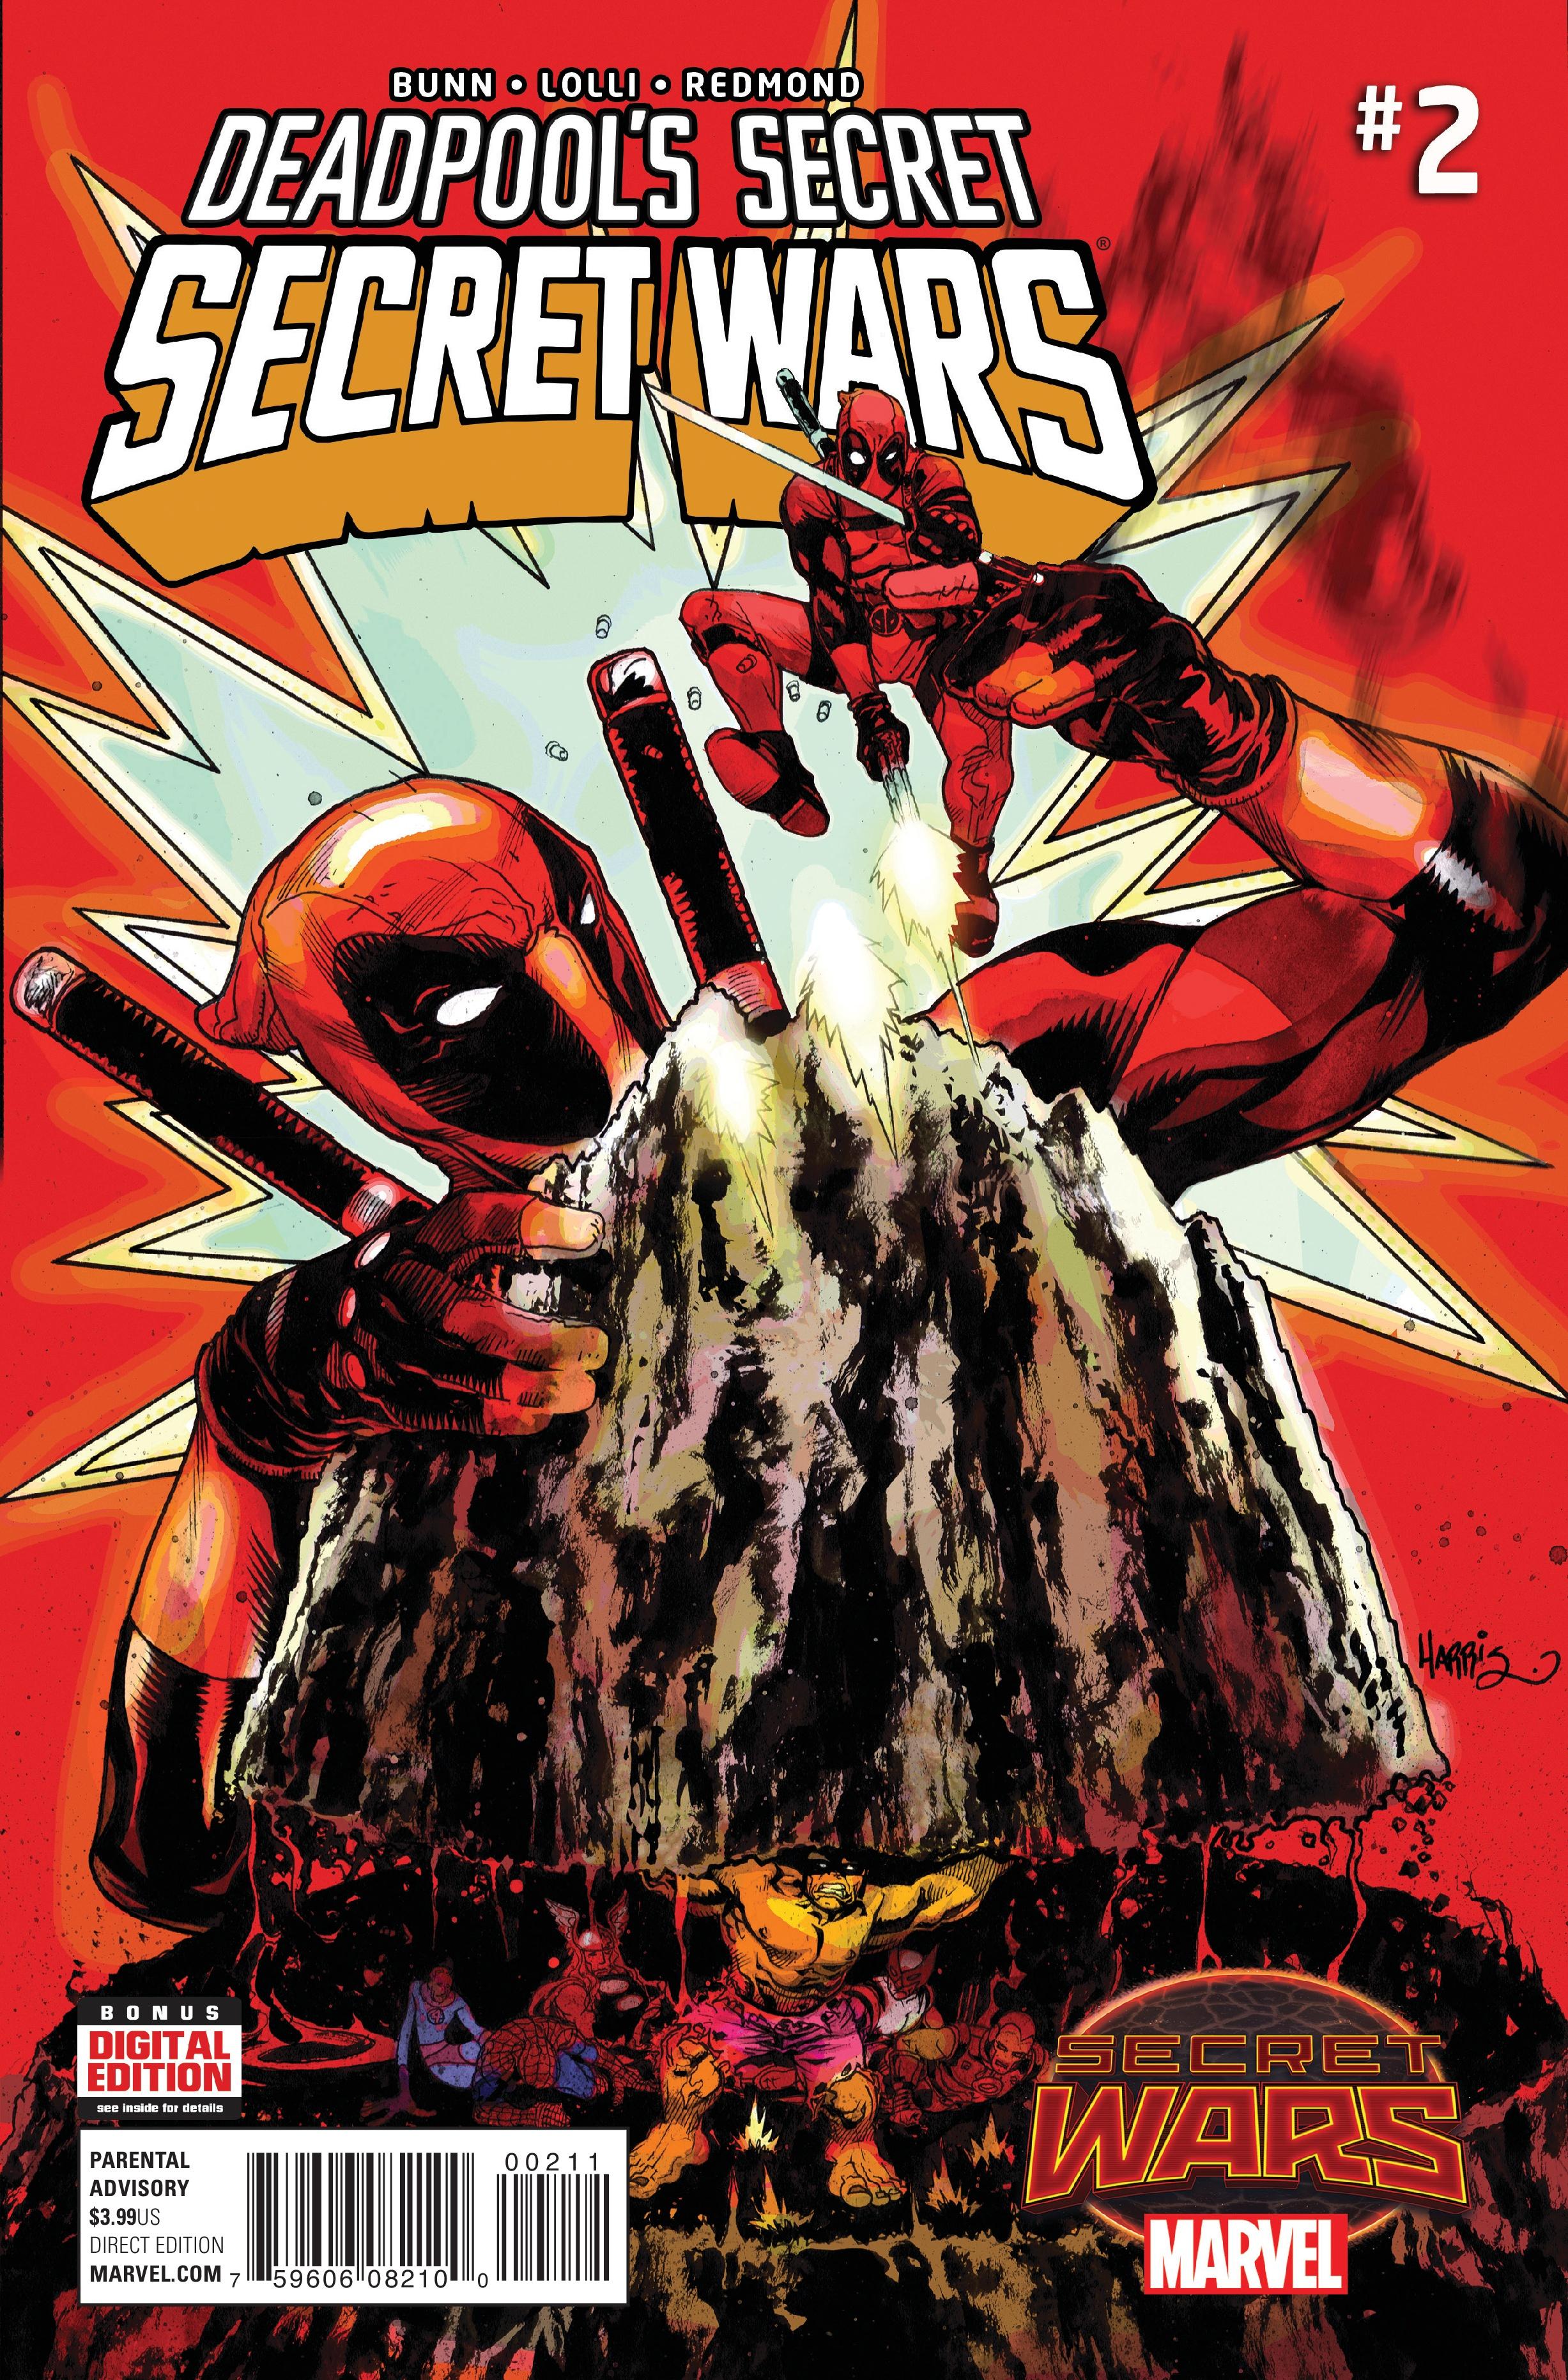 Deadpool's Secret Secret Wars Vol. 1 #2